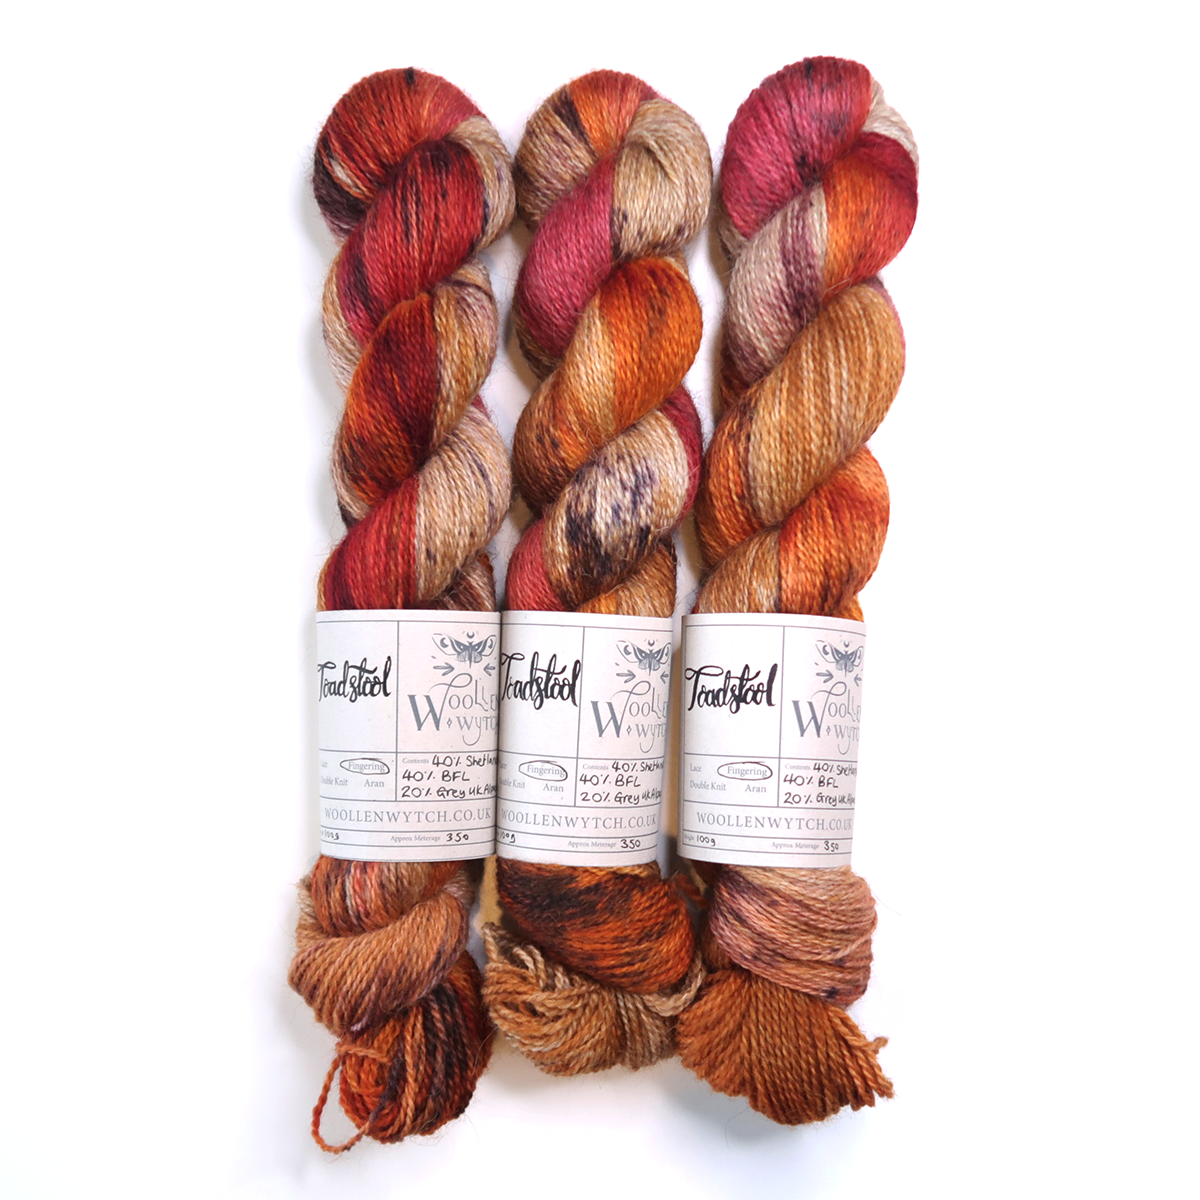 Toadstool hand dyed yarn shetland british wool woollen wytch bristol uk 